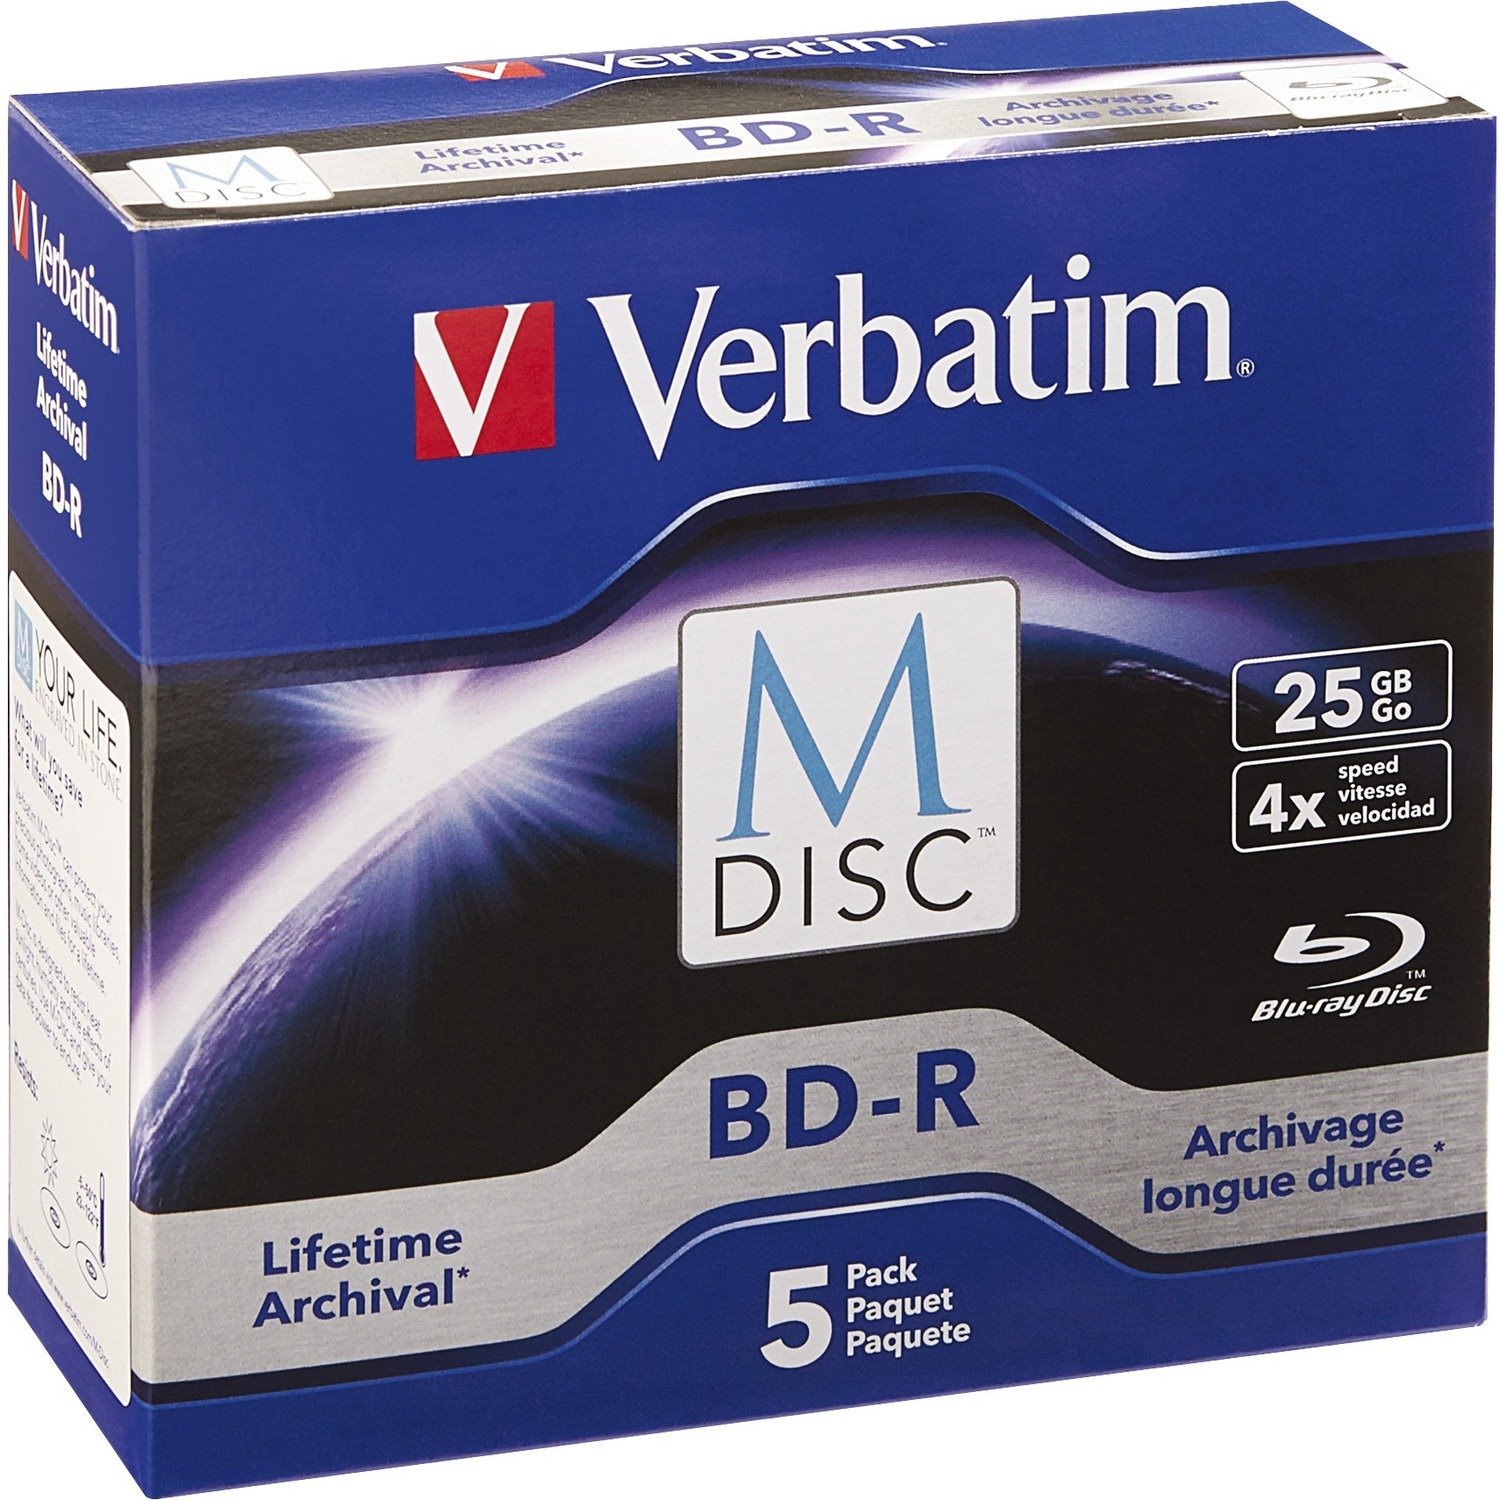 Verbatim M-Disc BD-R 25GB 4X with Branded Surface - 5pk Jewel Case Box